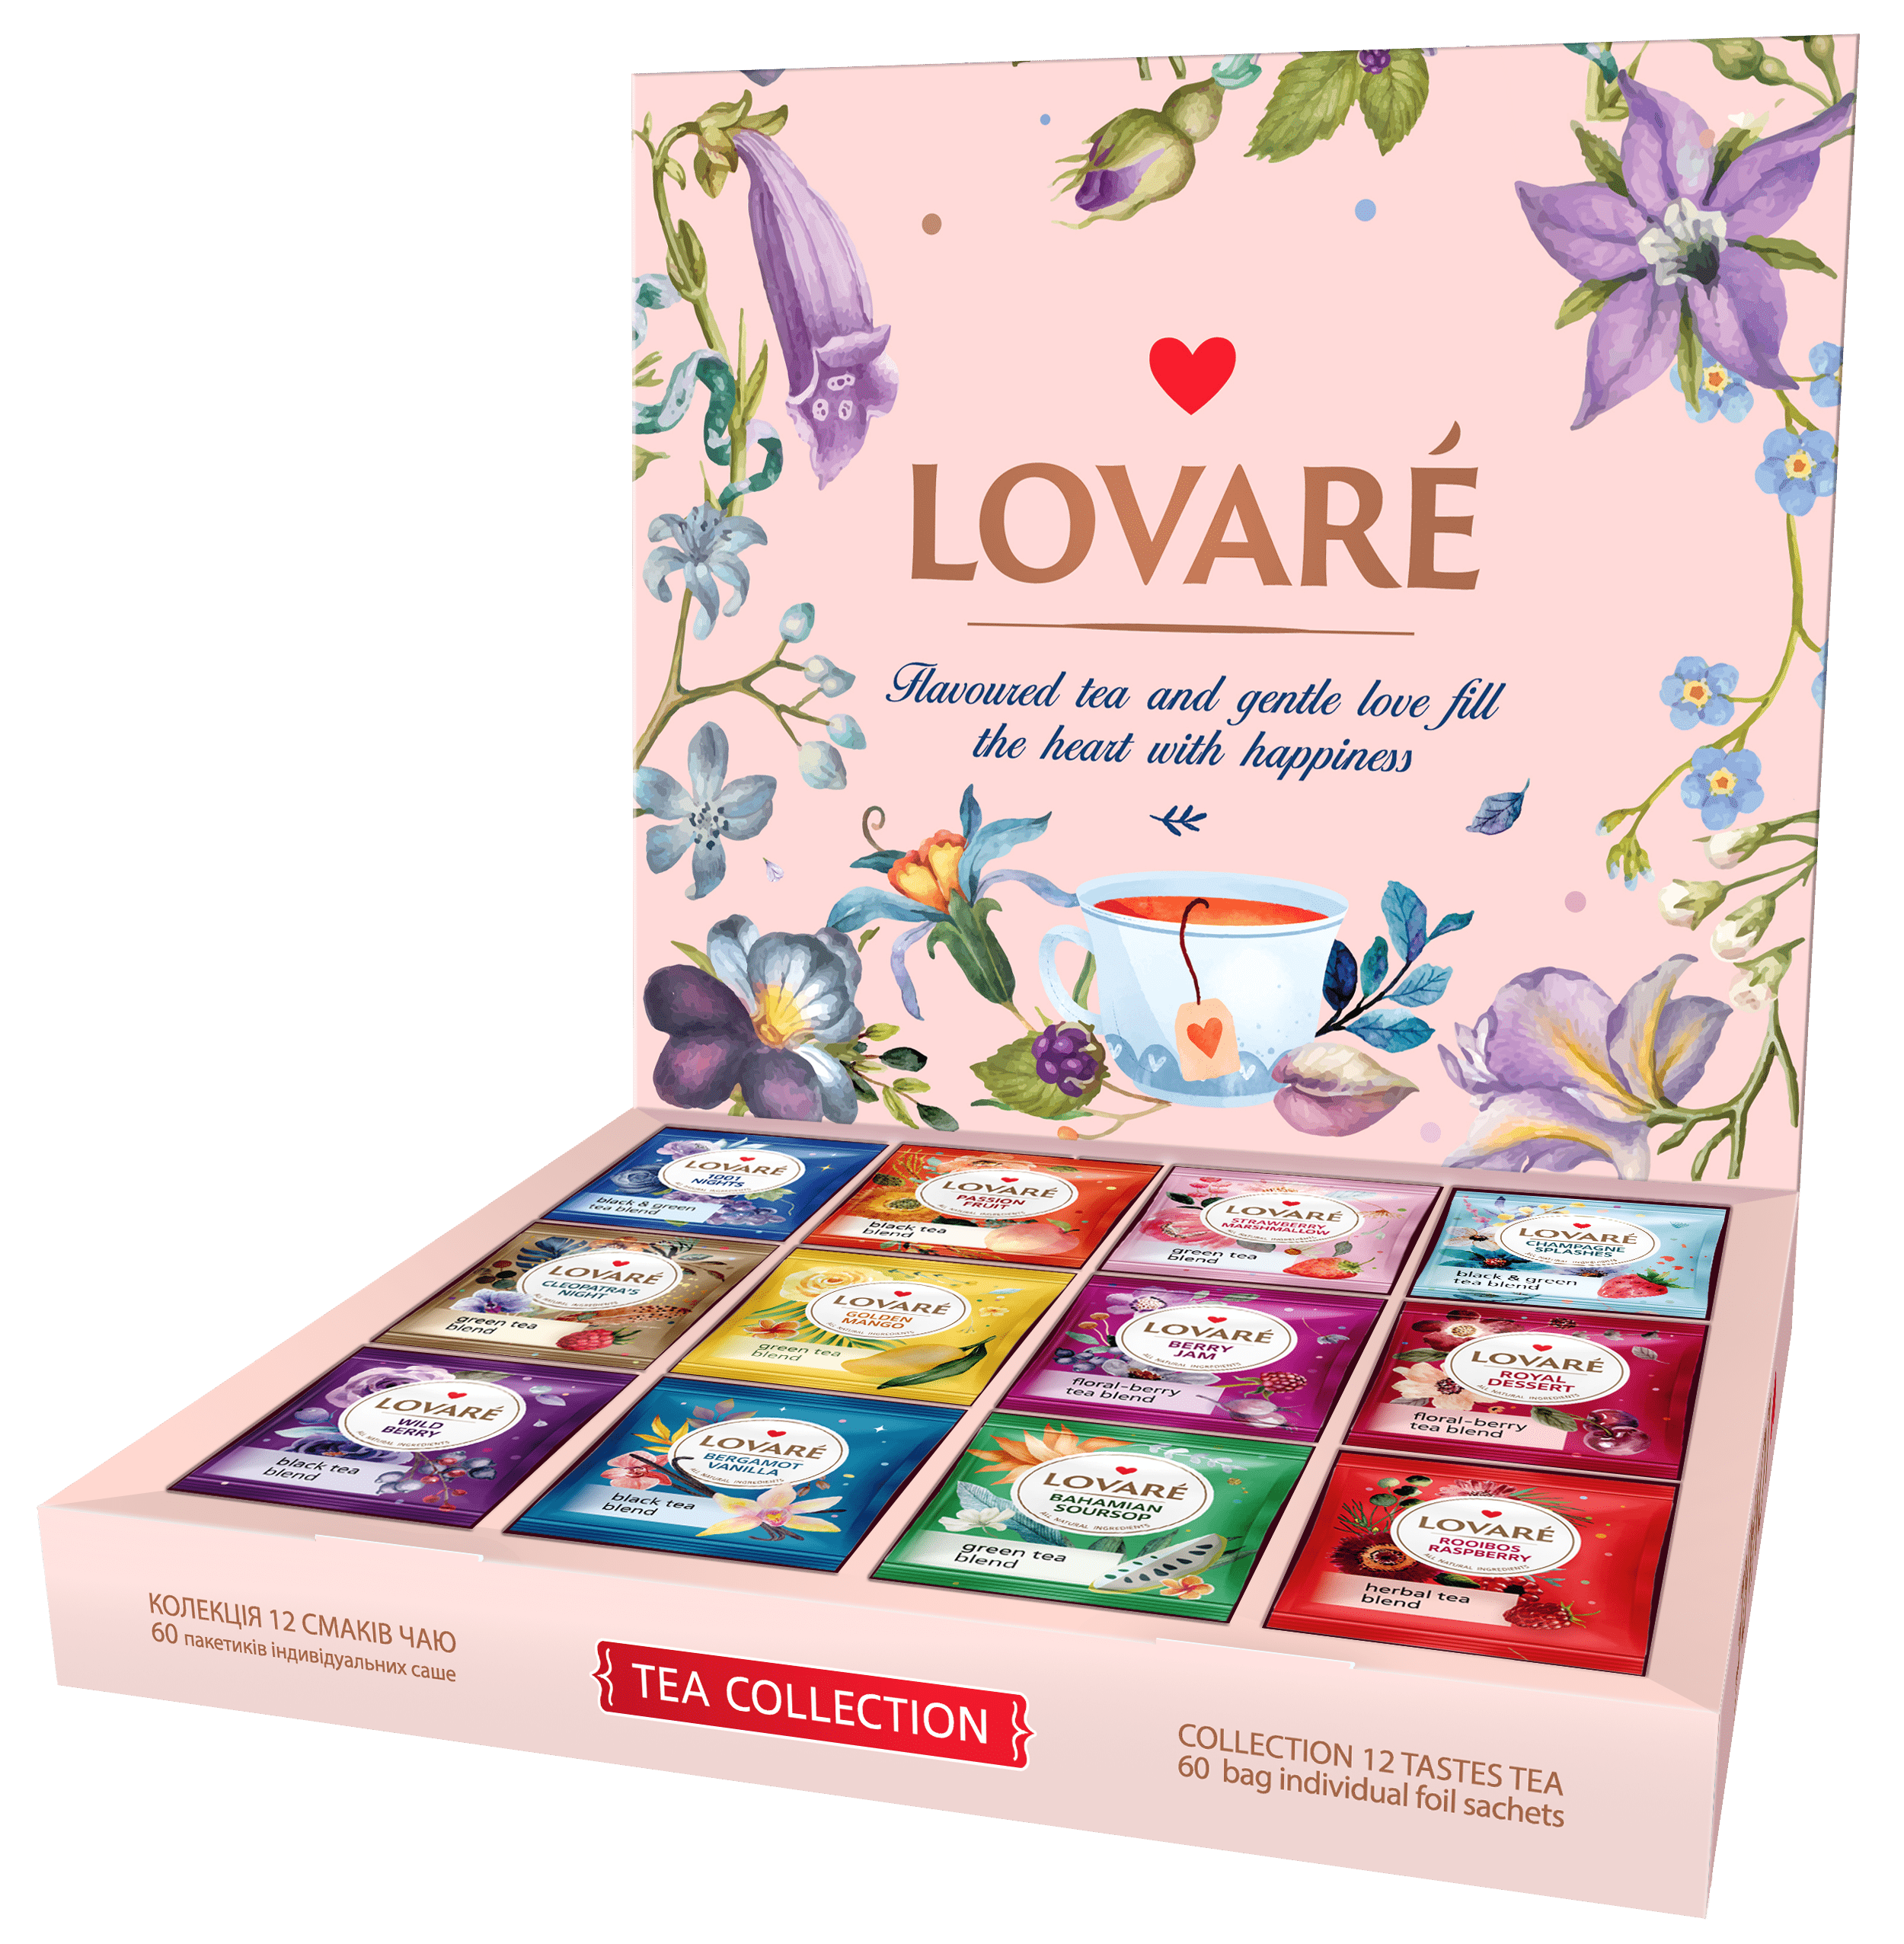 Lovare Tea Collection